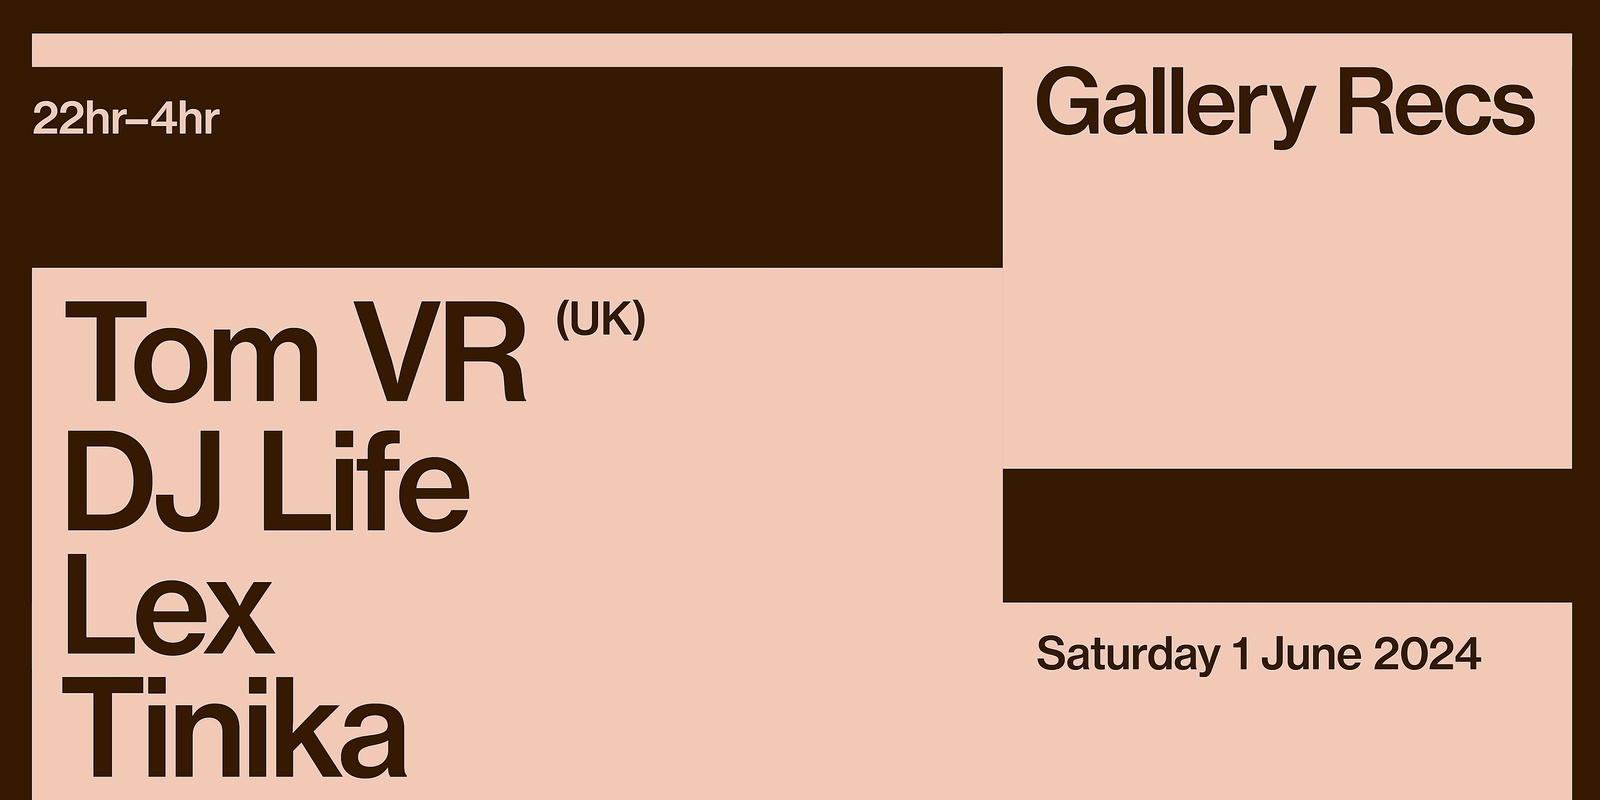 Banner image for Gallery - Tom VR (UK), DJ Life, Tinika & Lex